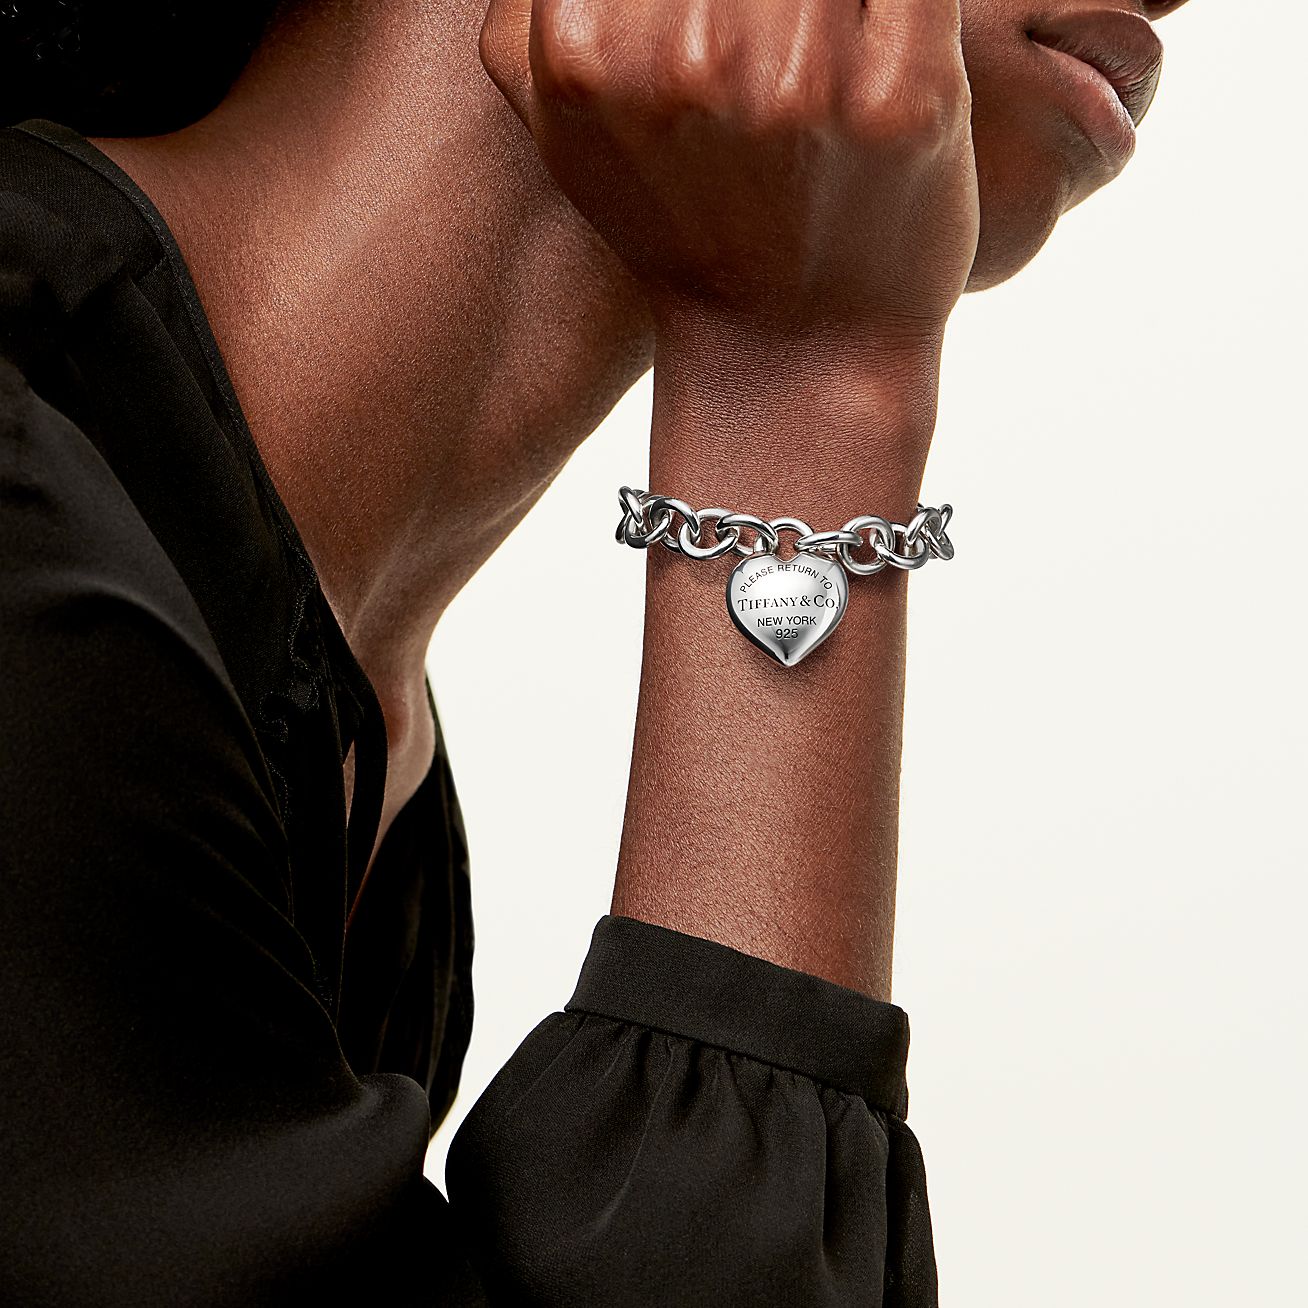 Tiffany & Co. Silver Square Cushion Toggle Bracelet